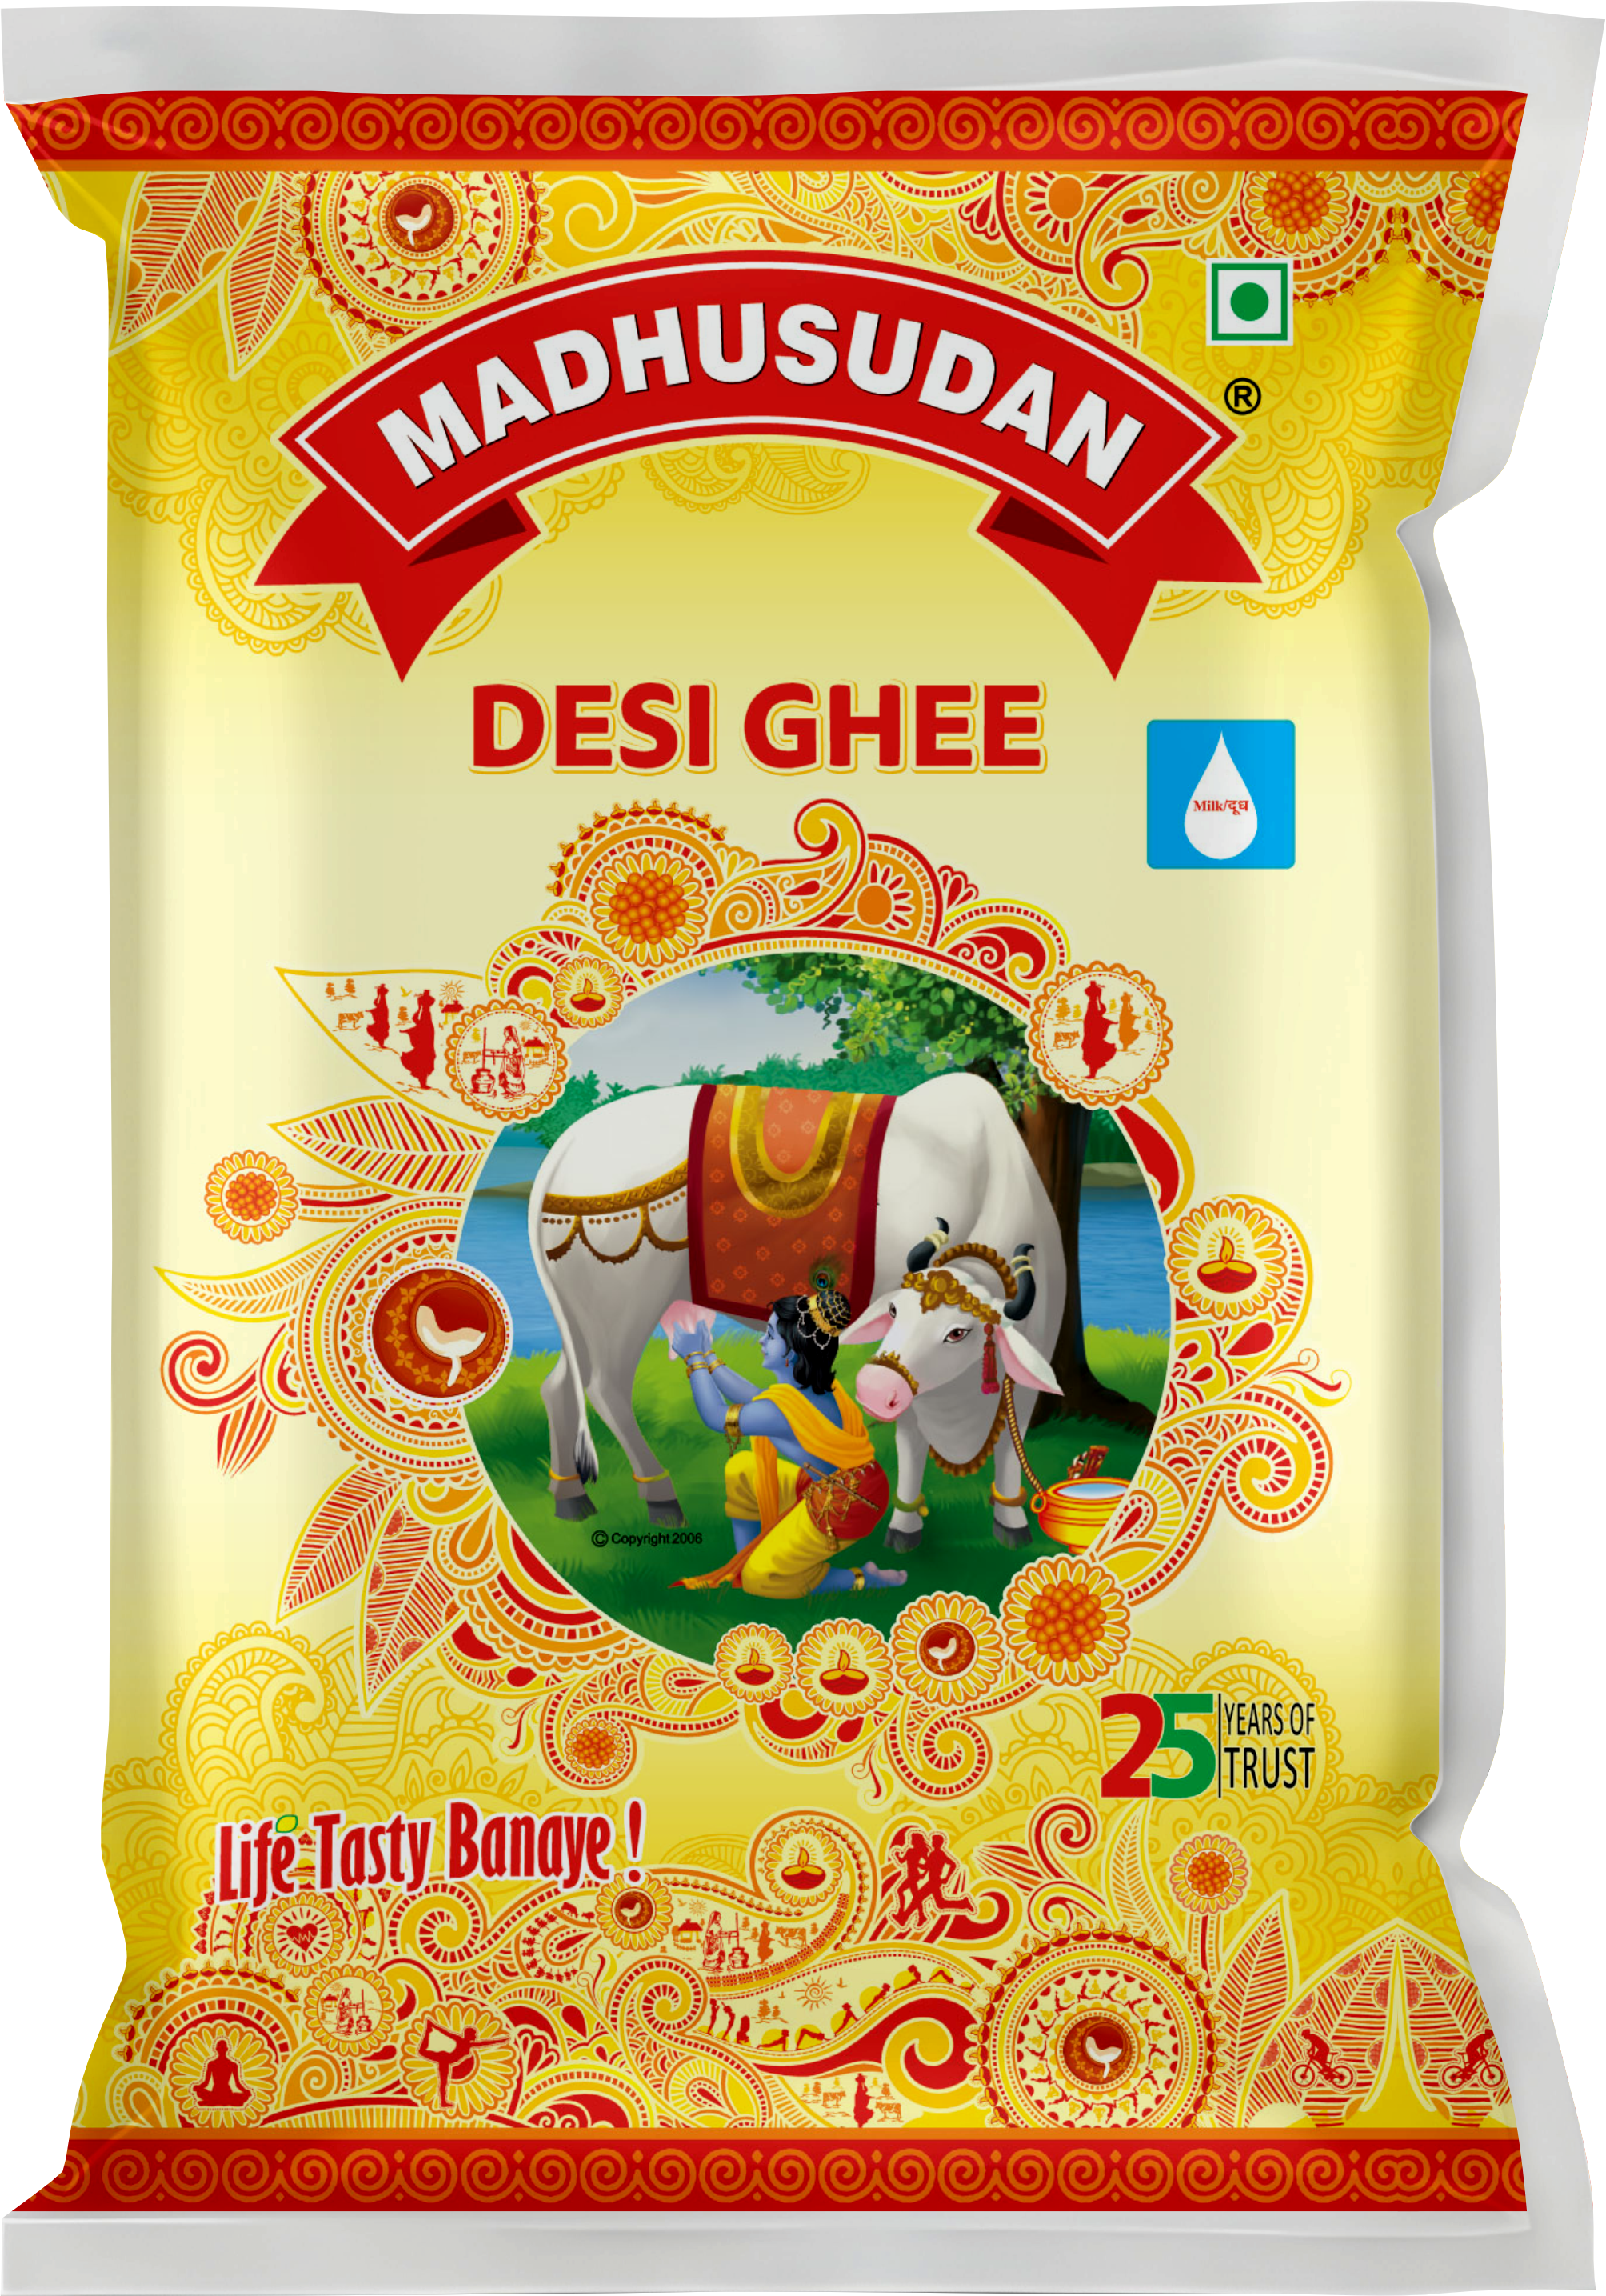 Madhusudan Desi Ghee 1 ltr Poly Pack